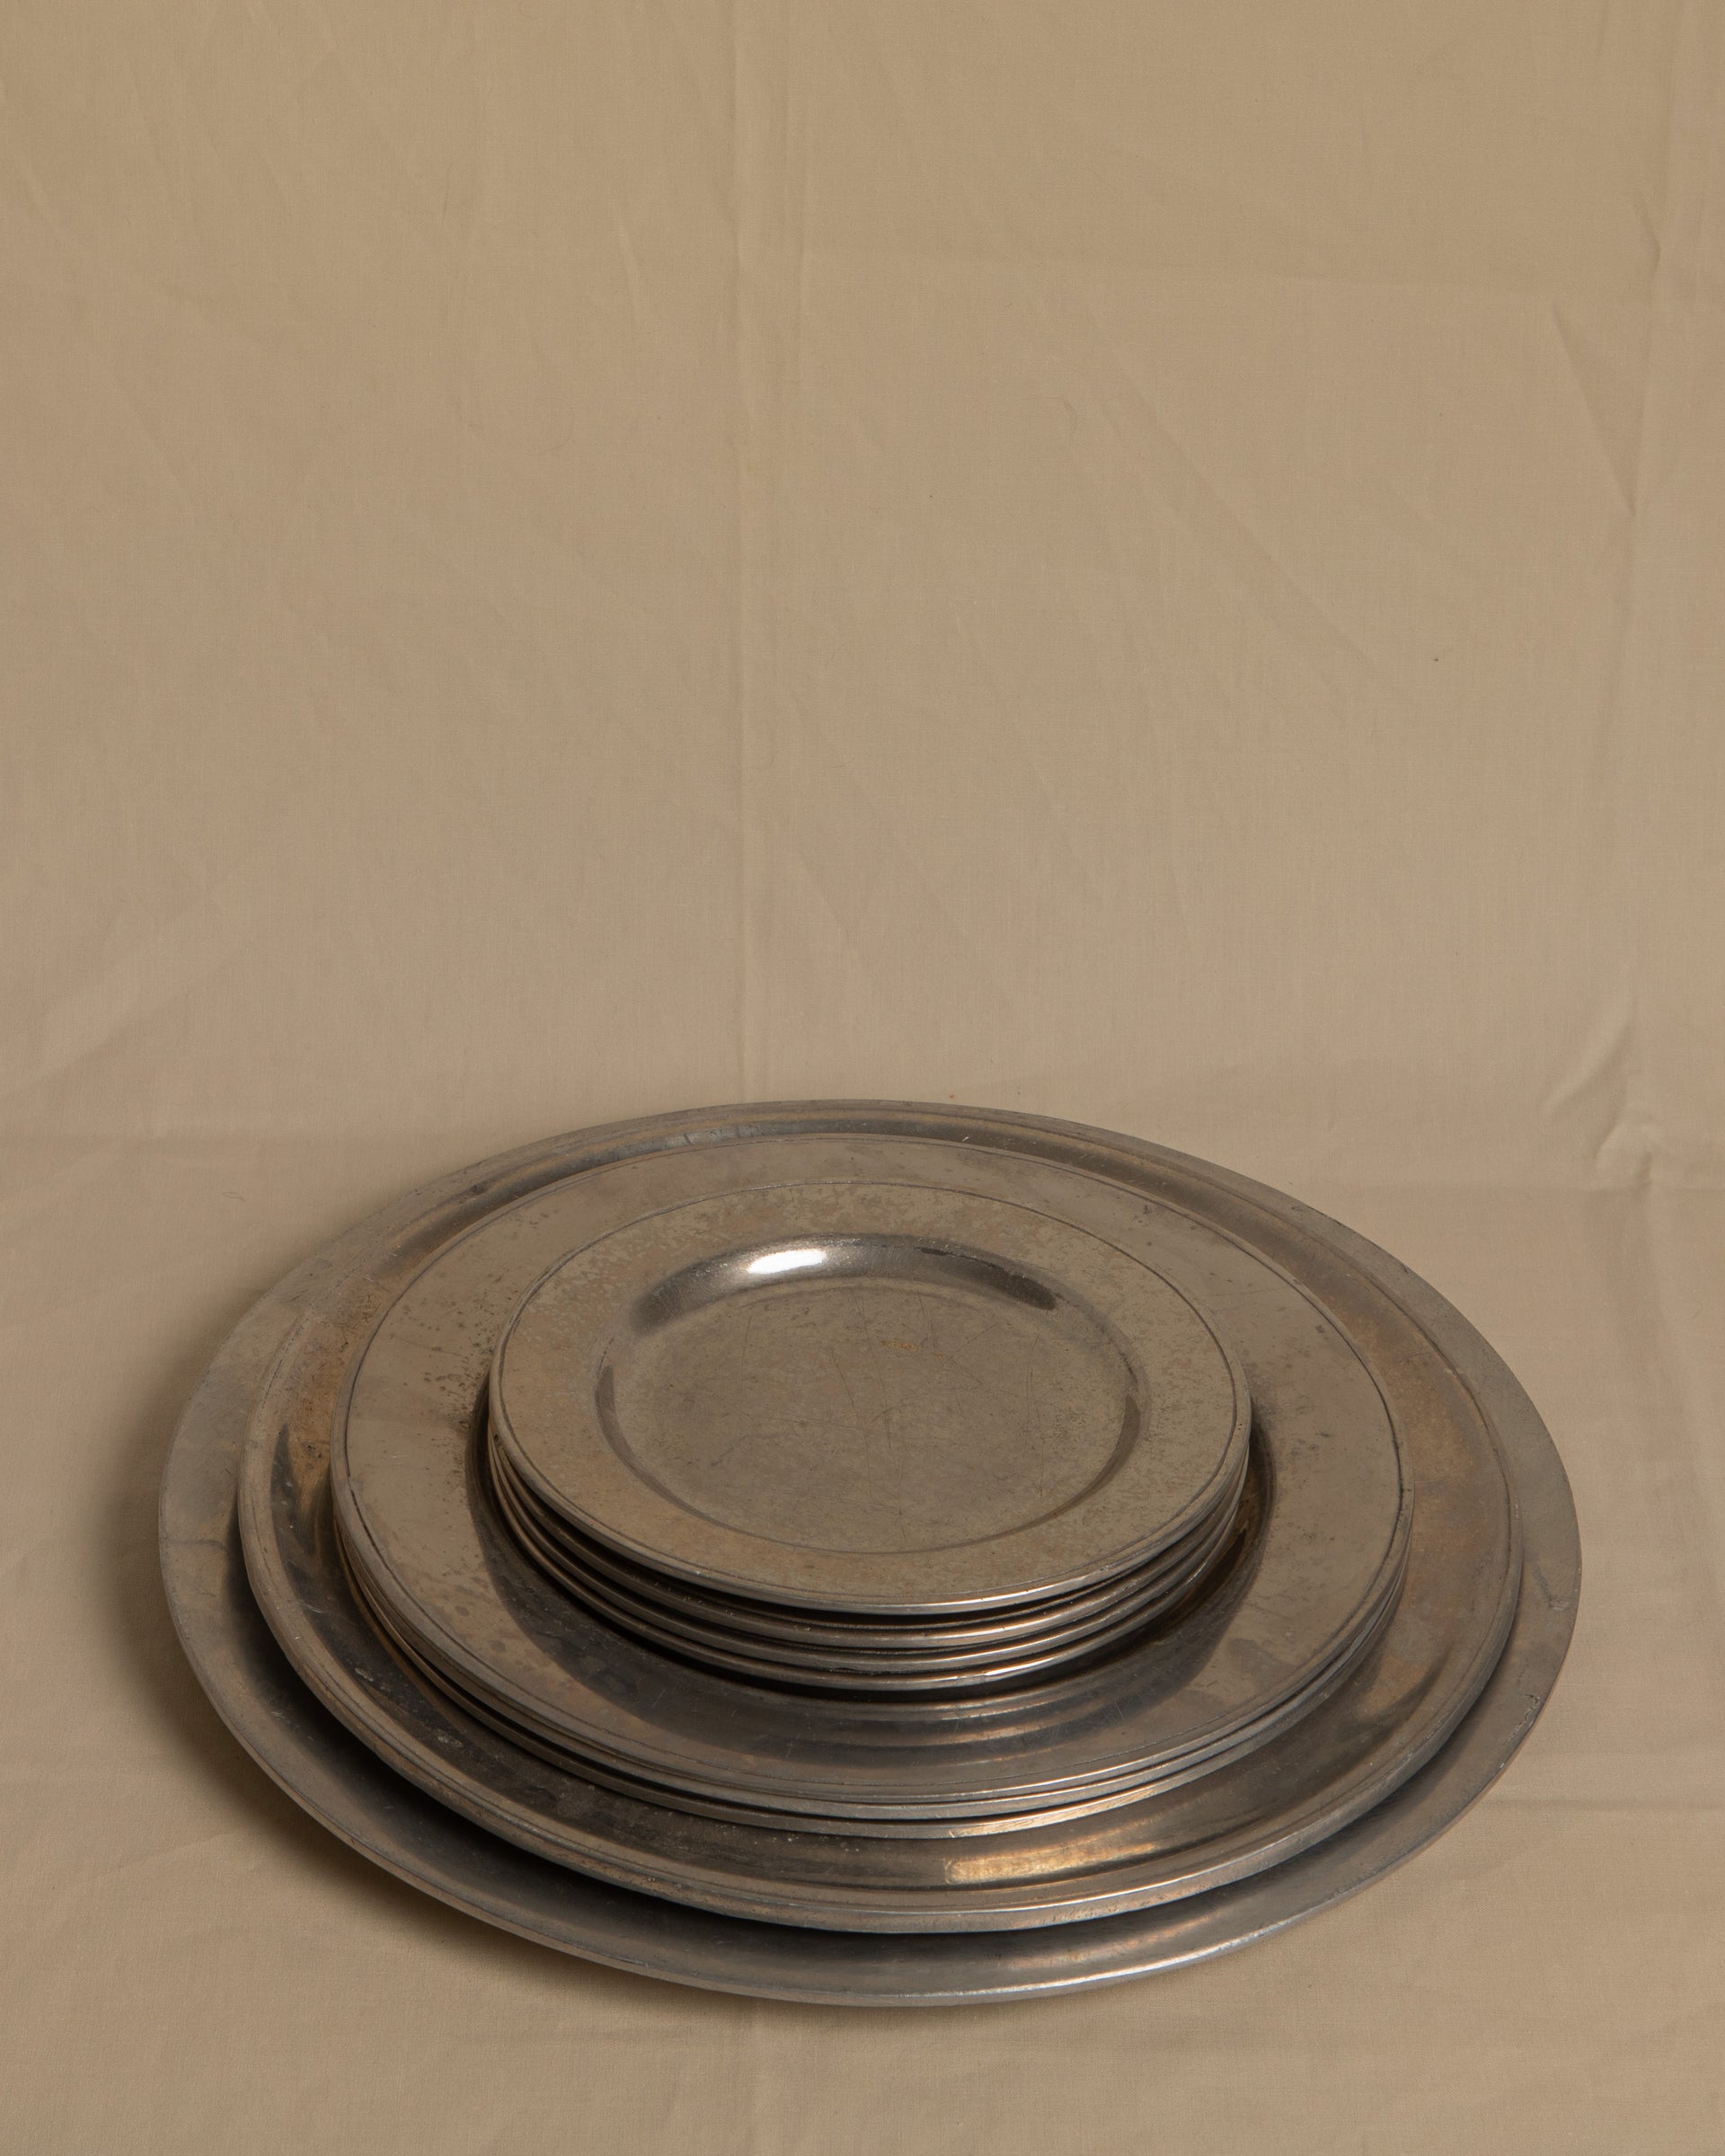 Wilton Columbia Pewter Plate, Medium Small No. 3